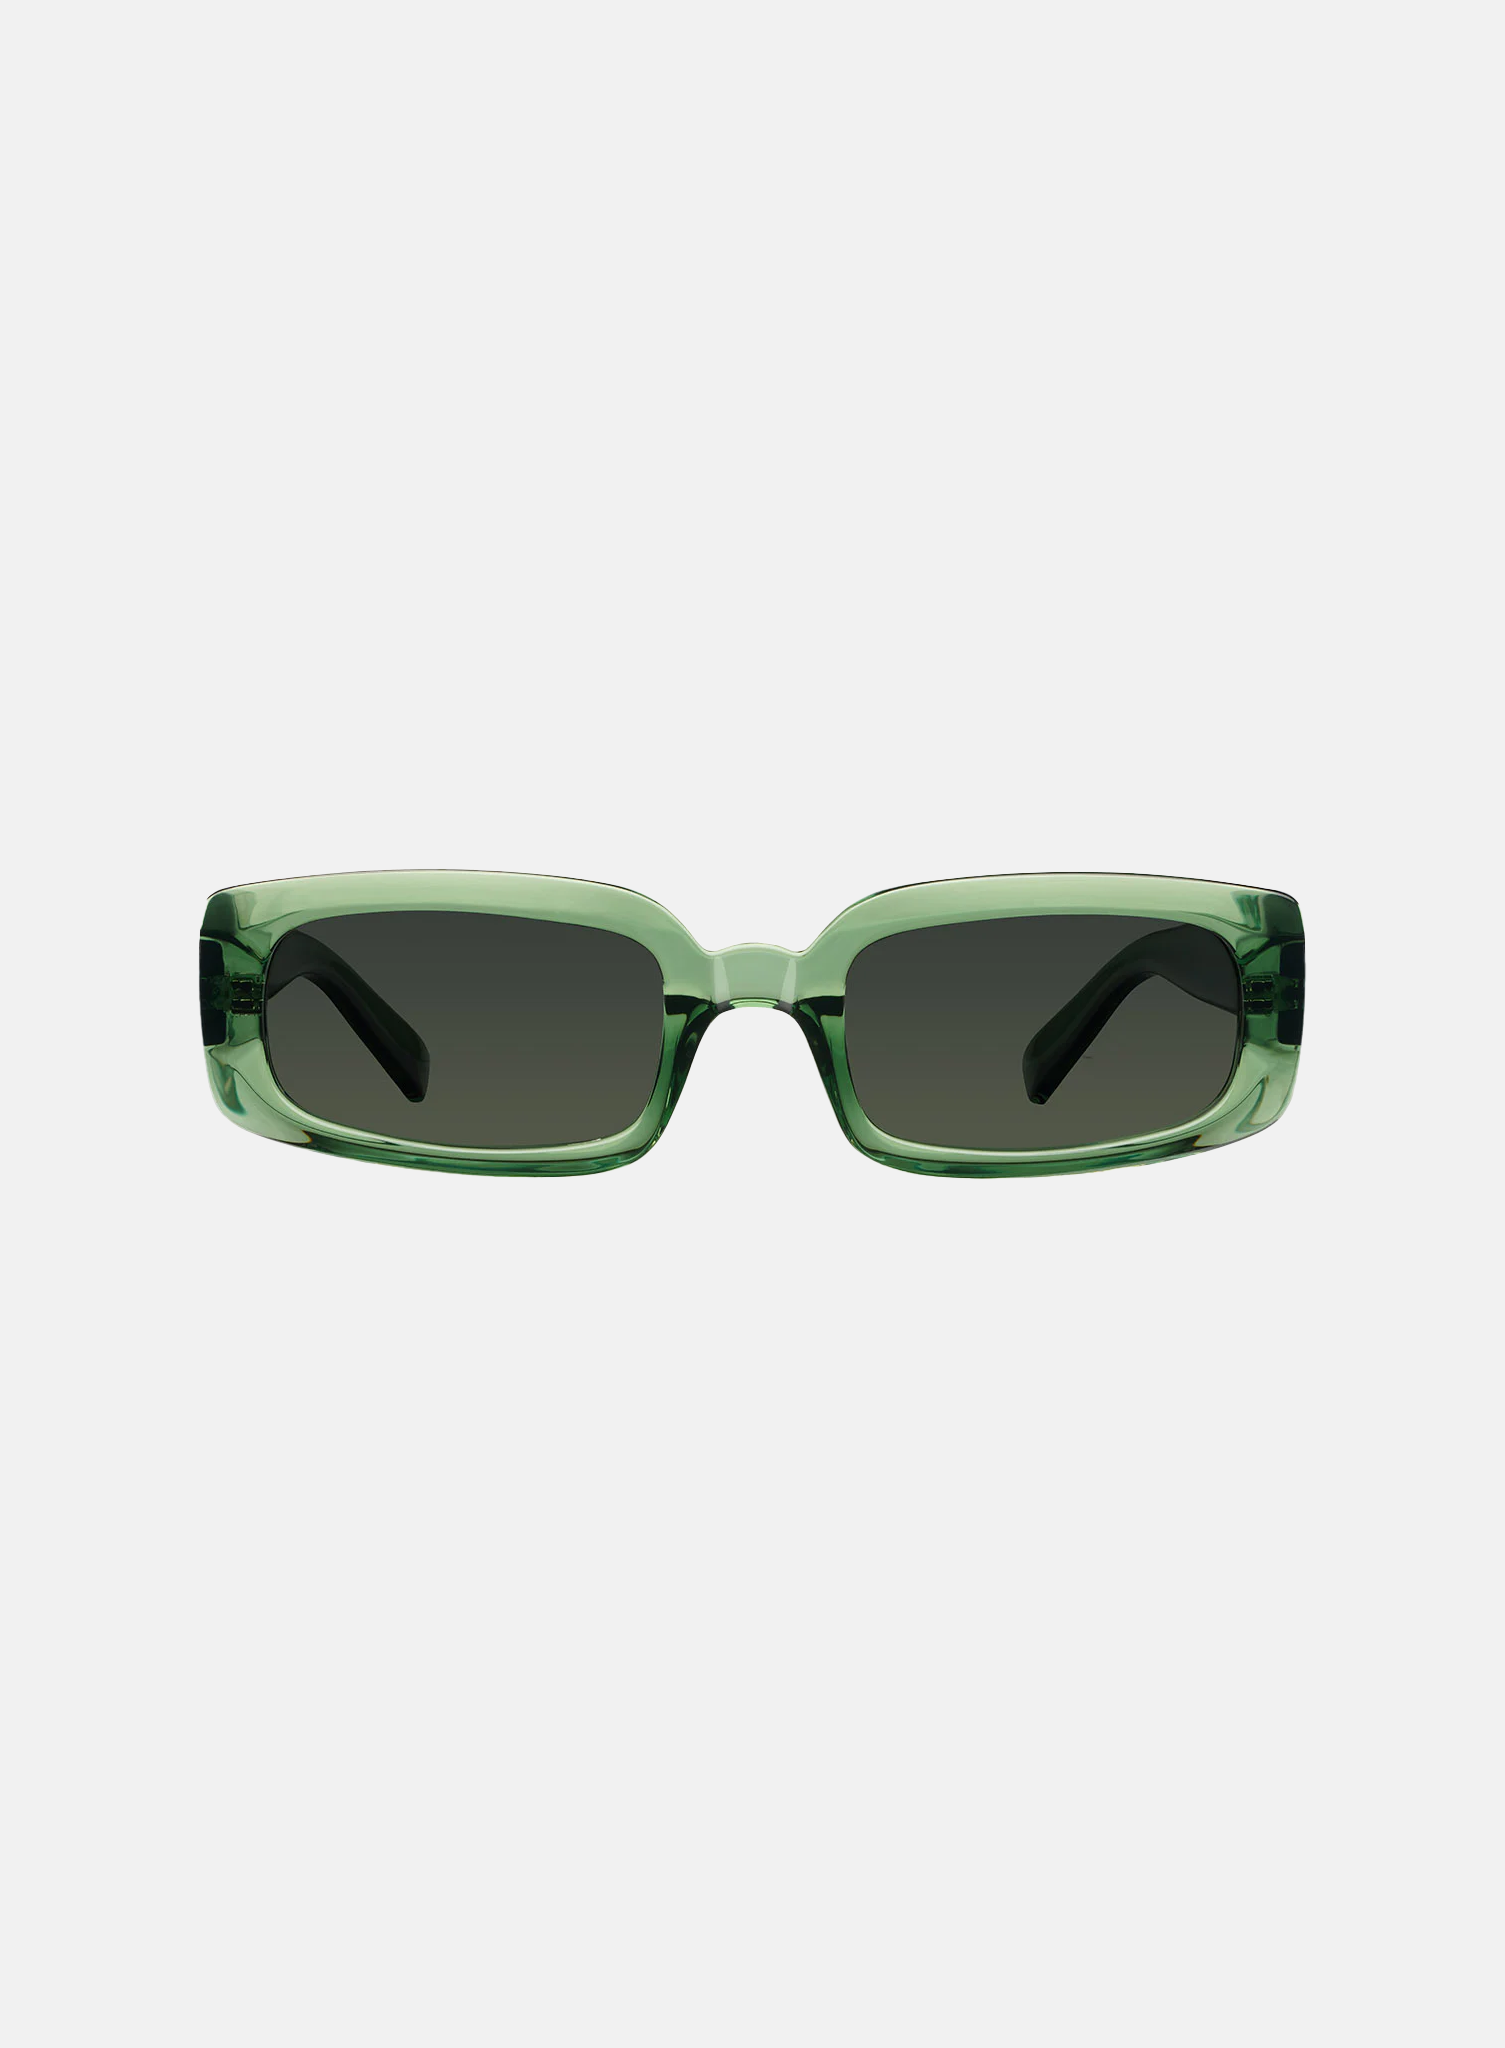 Konata Sunglasses Olive